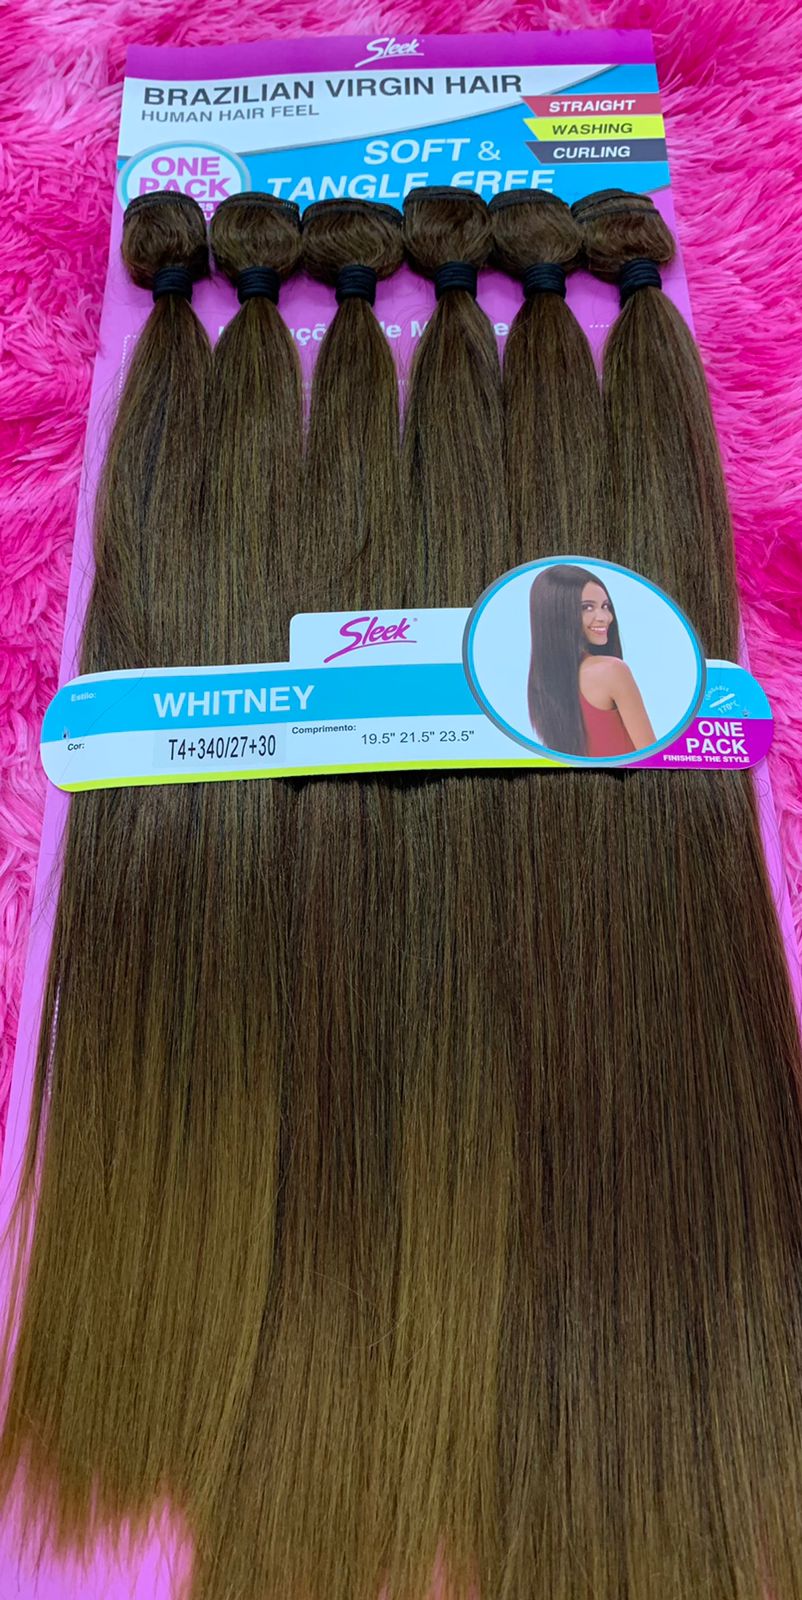 Brazilian Virgin Hair Bio Vegetal - Whitney T4+340/27+30